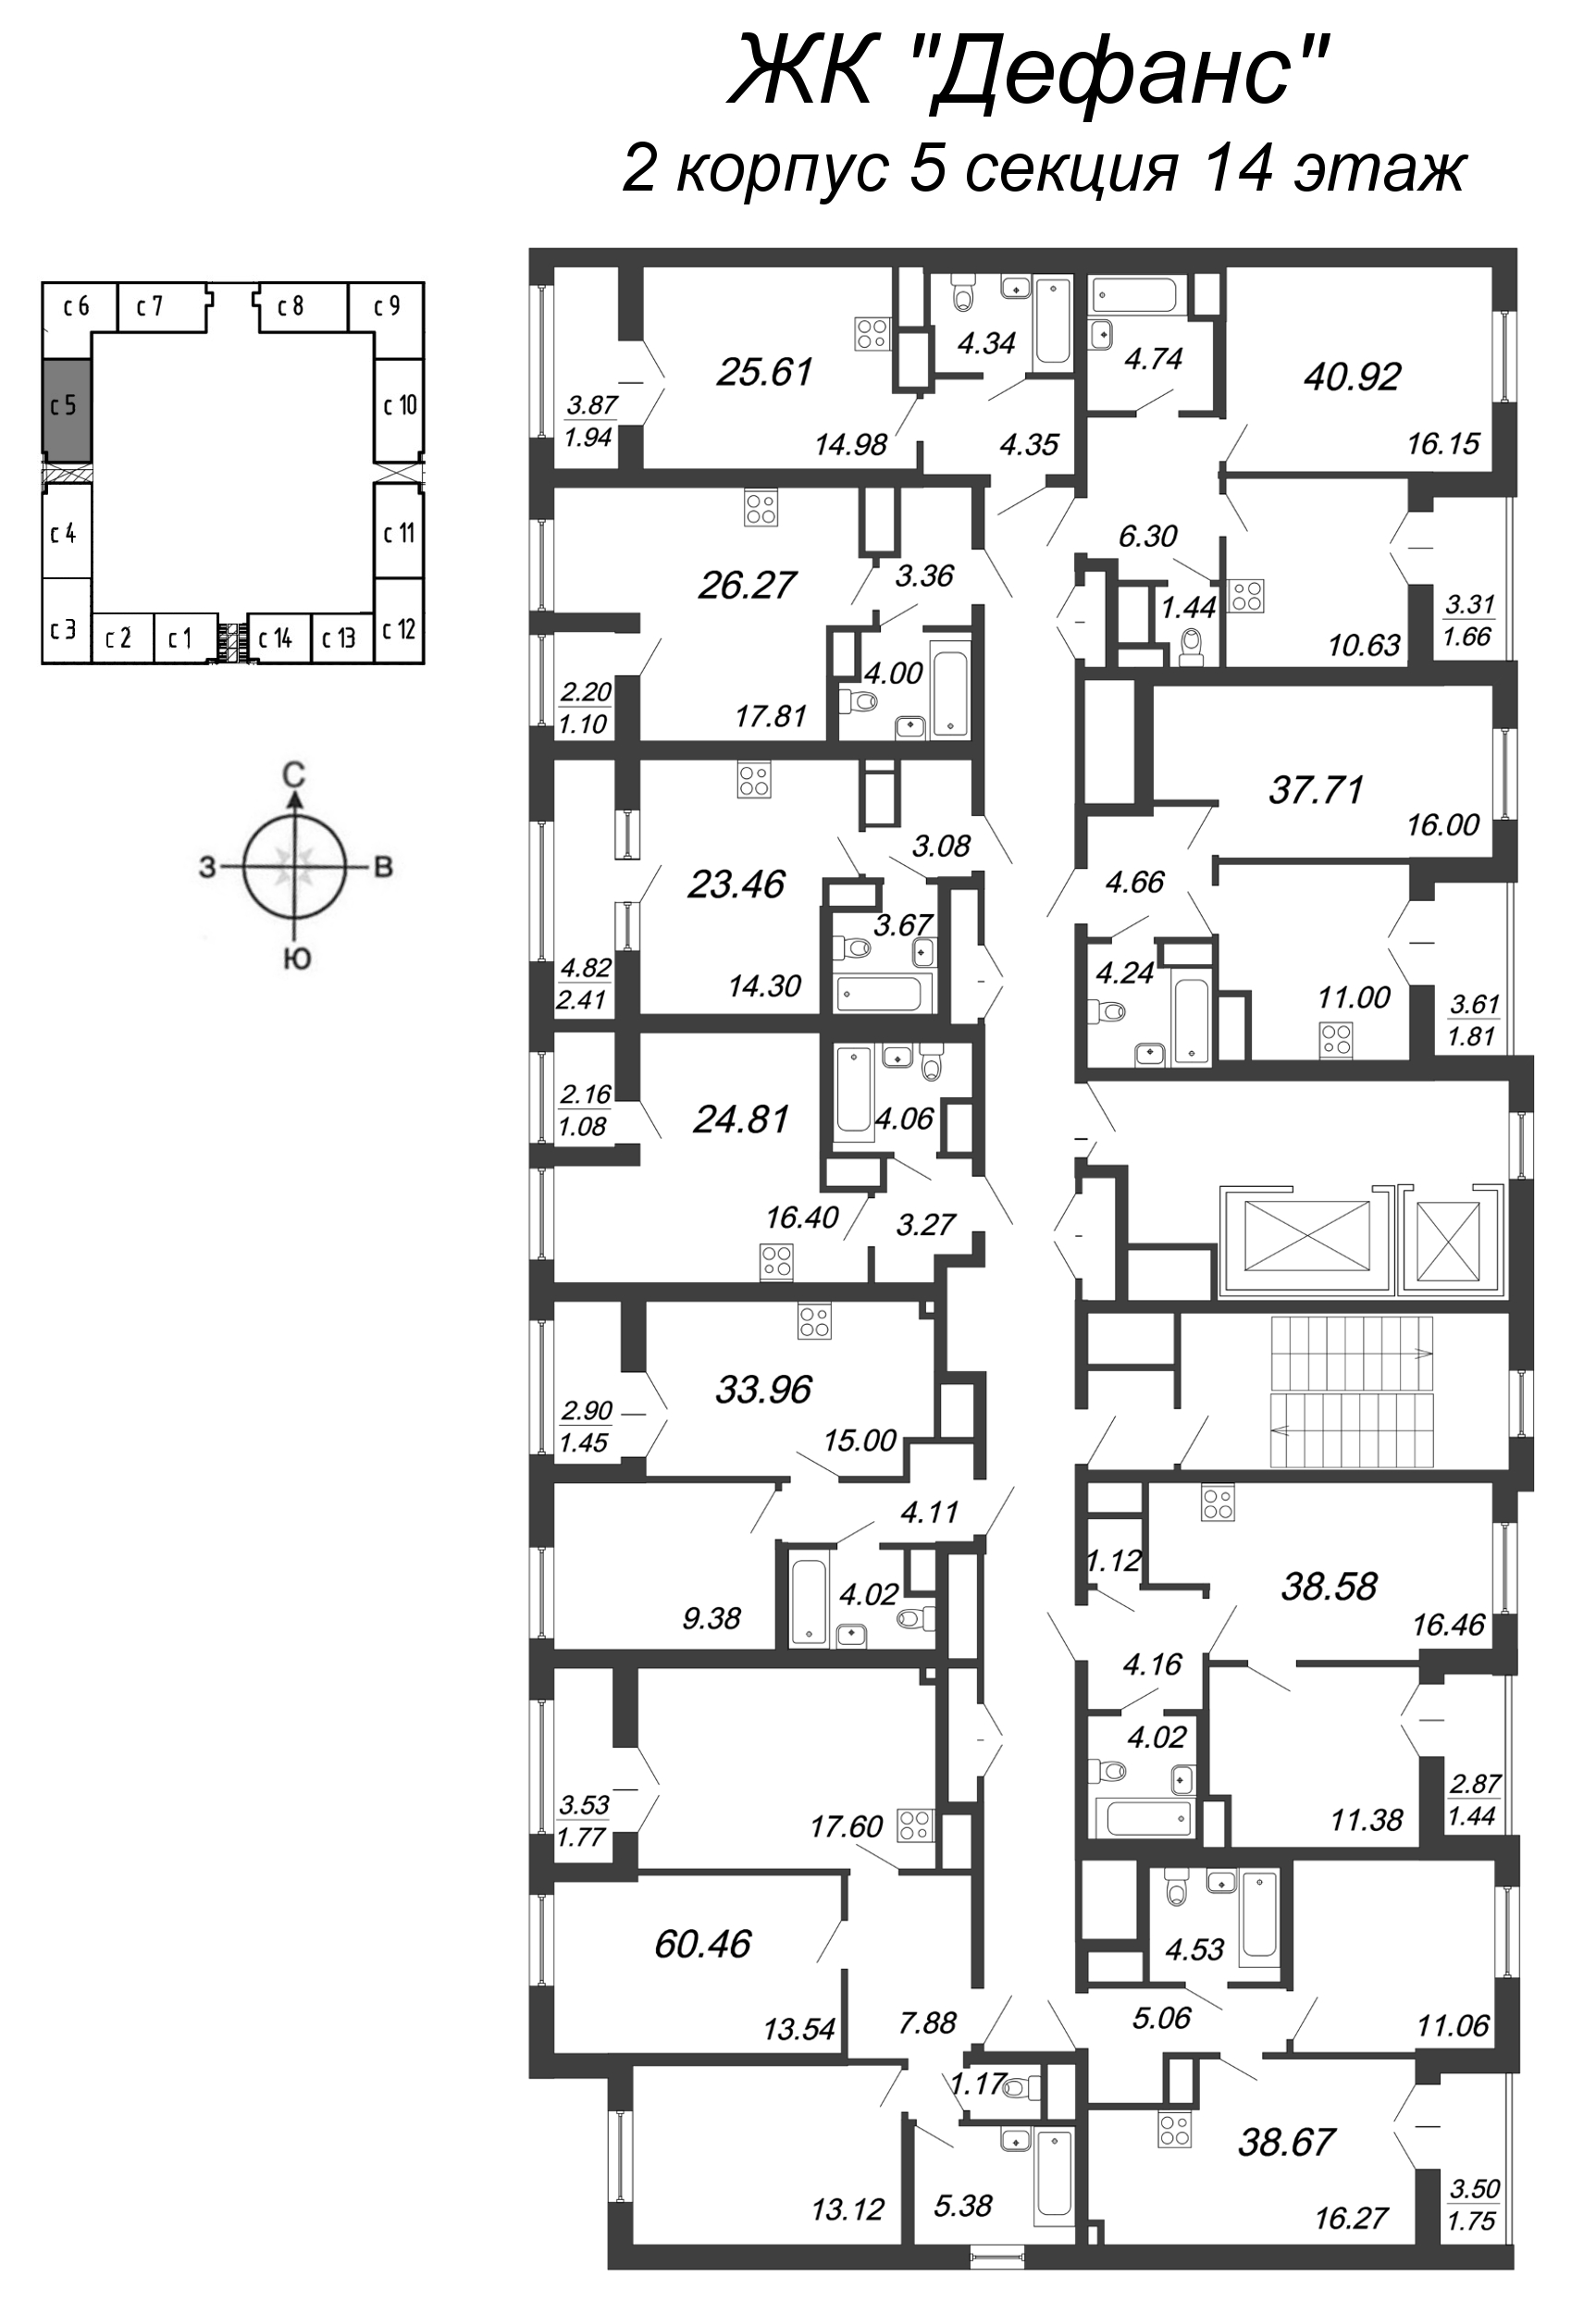 2-комнатная (Евро) квартира, 38.67 м² - планировка этажа